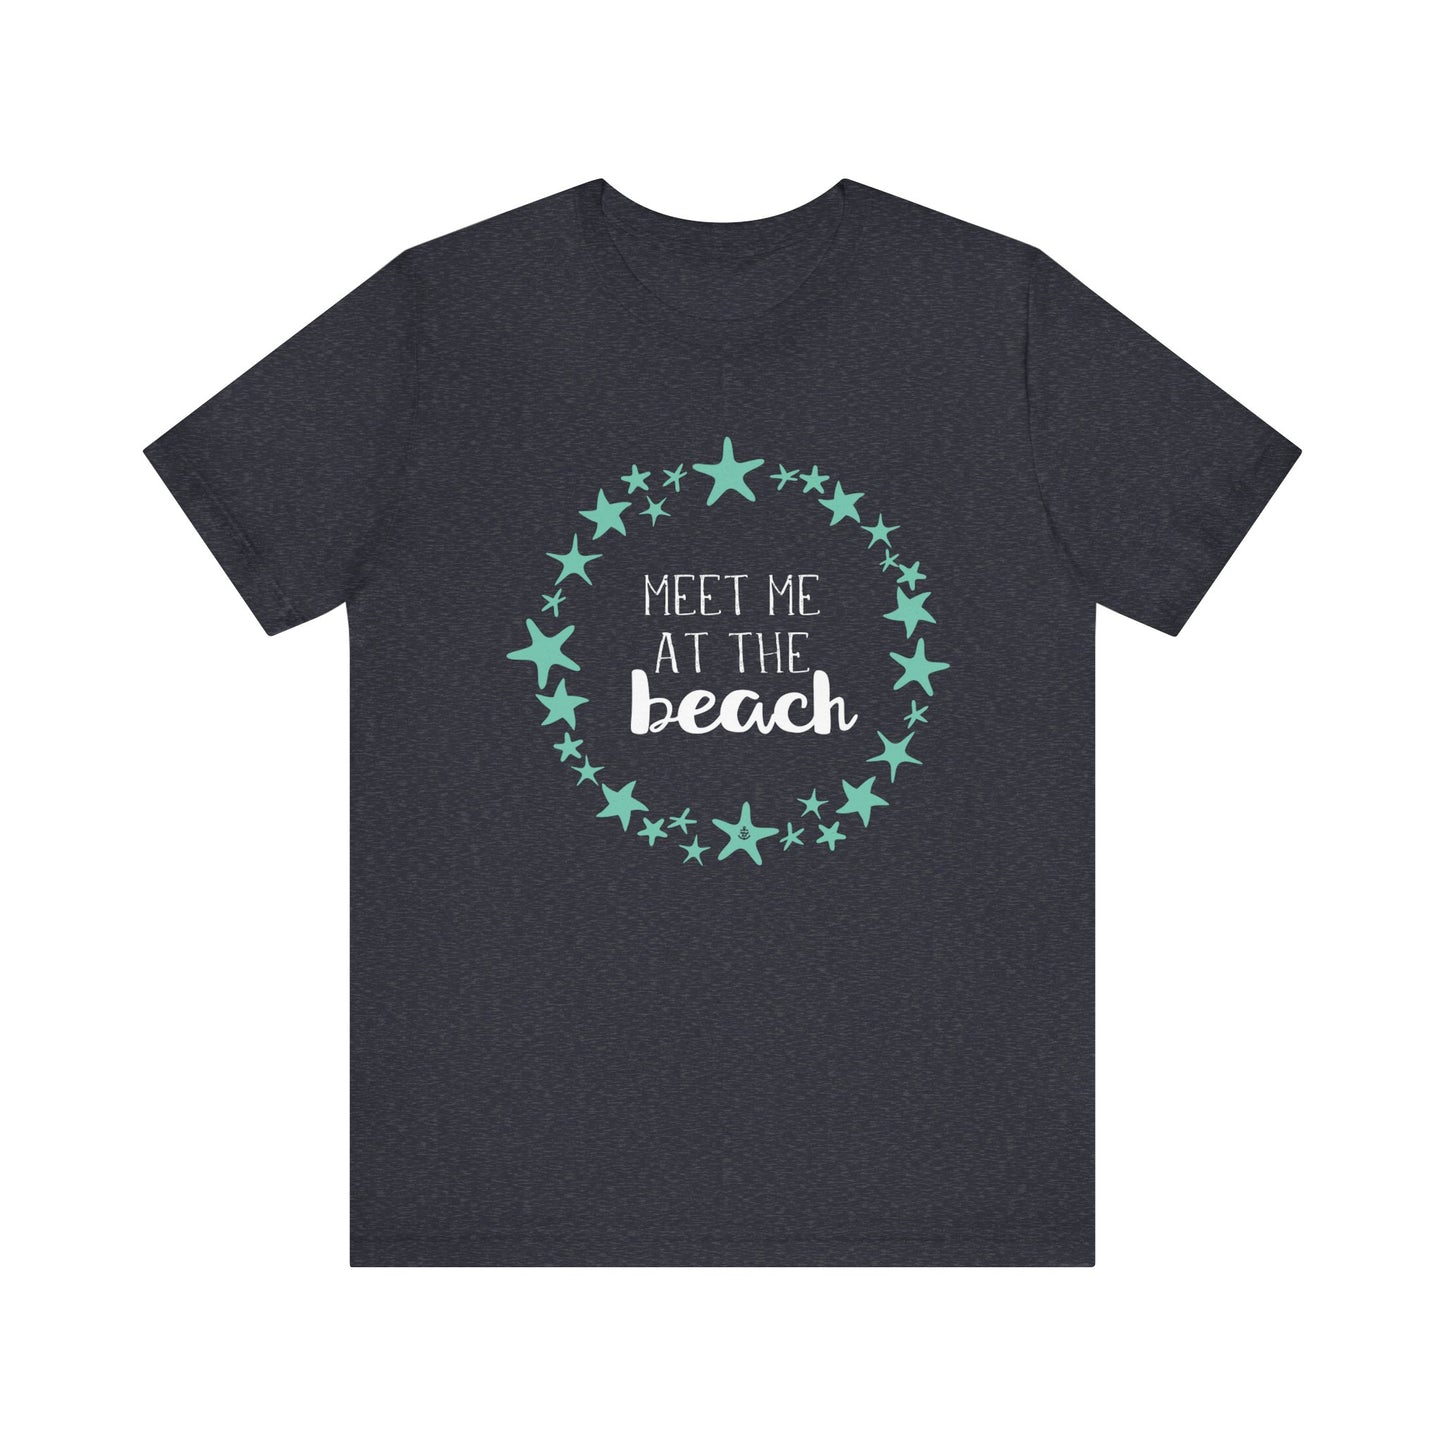 Meet me at the beach t-shirt, beachaholic tee, beach shirts for women, summer shirt, cruise trip shirt, vacation shirt, beac